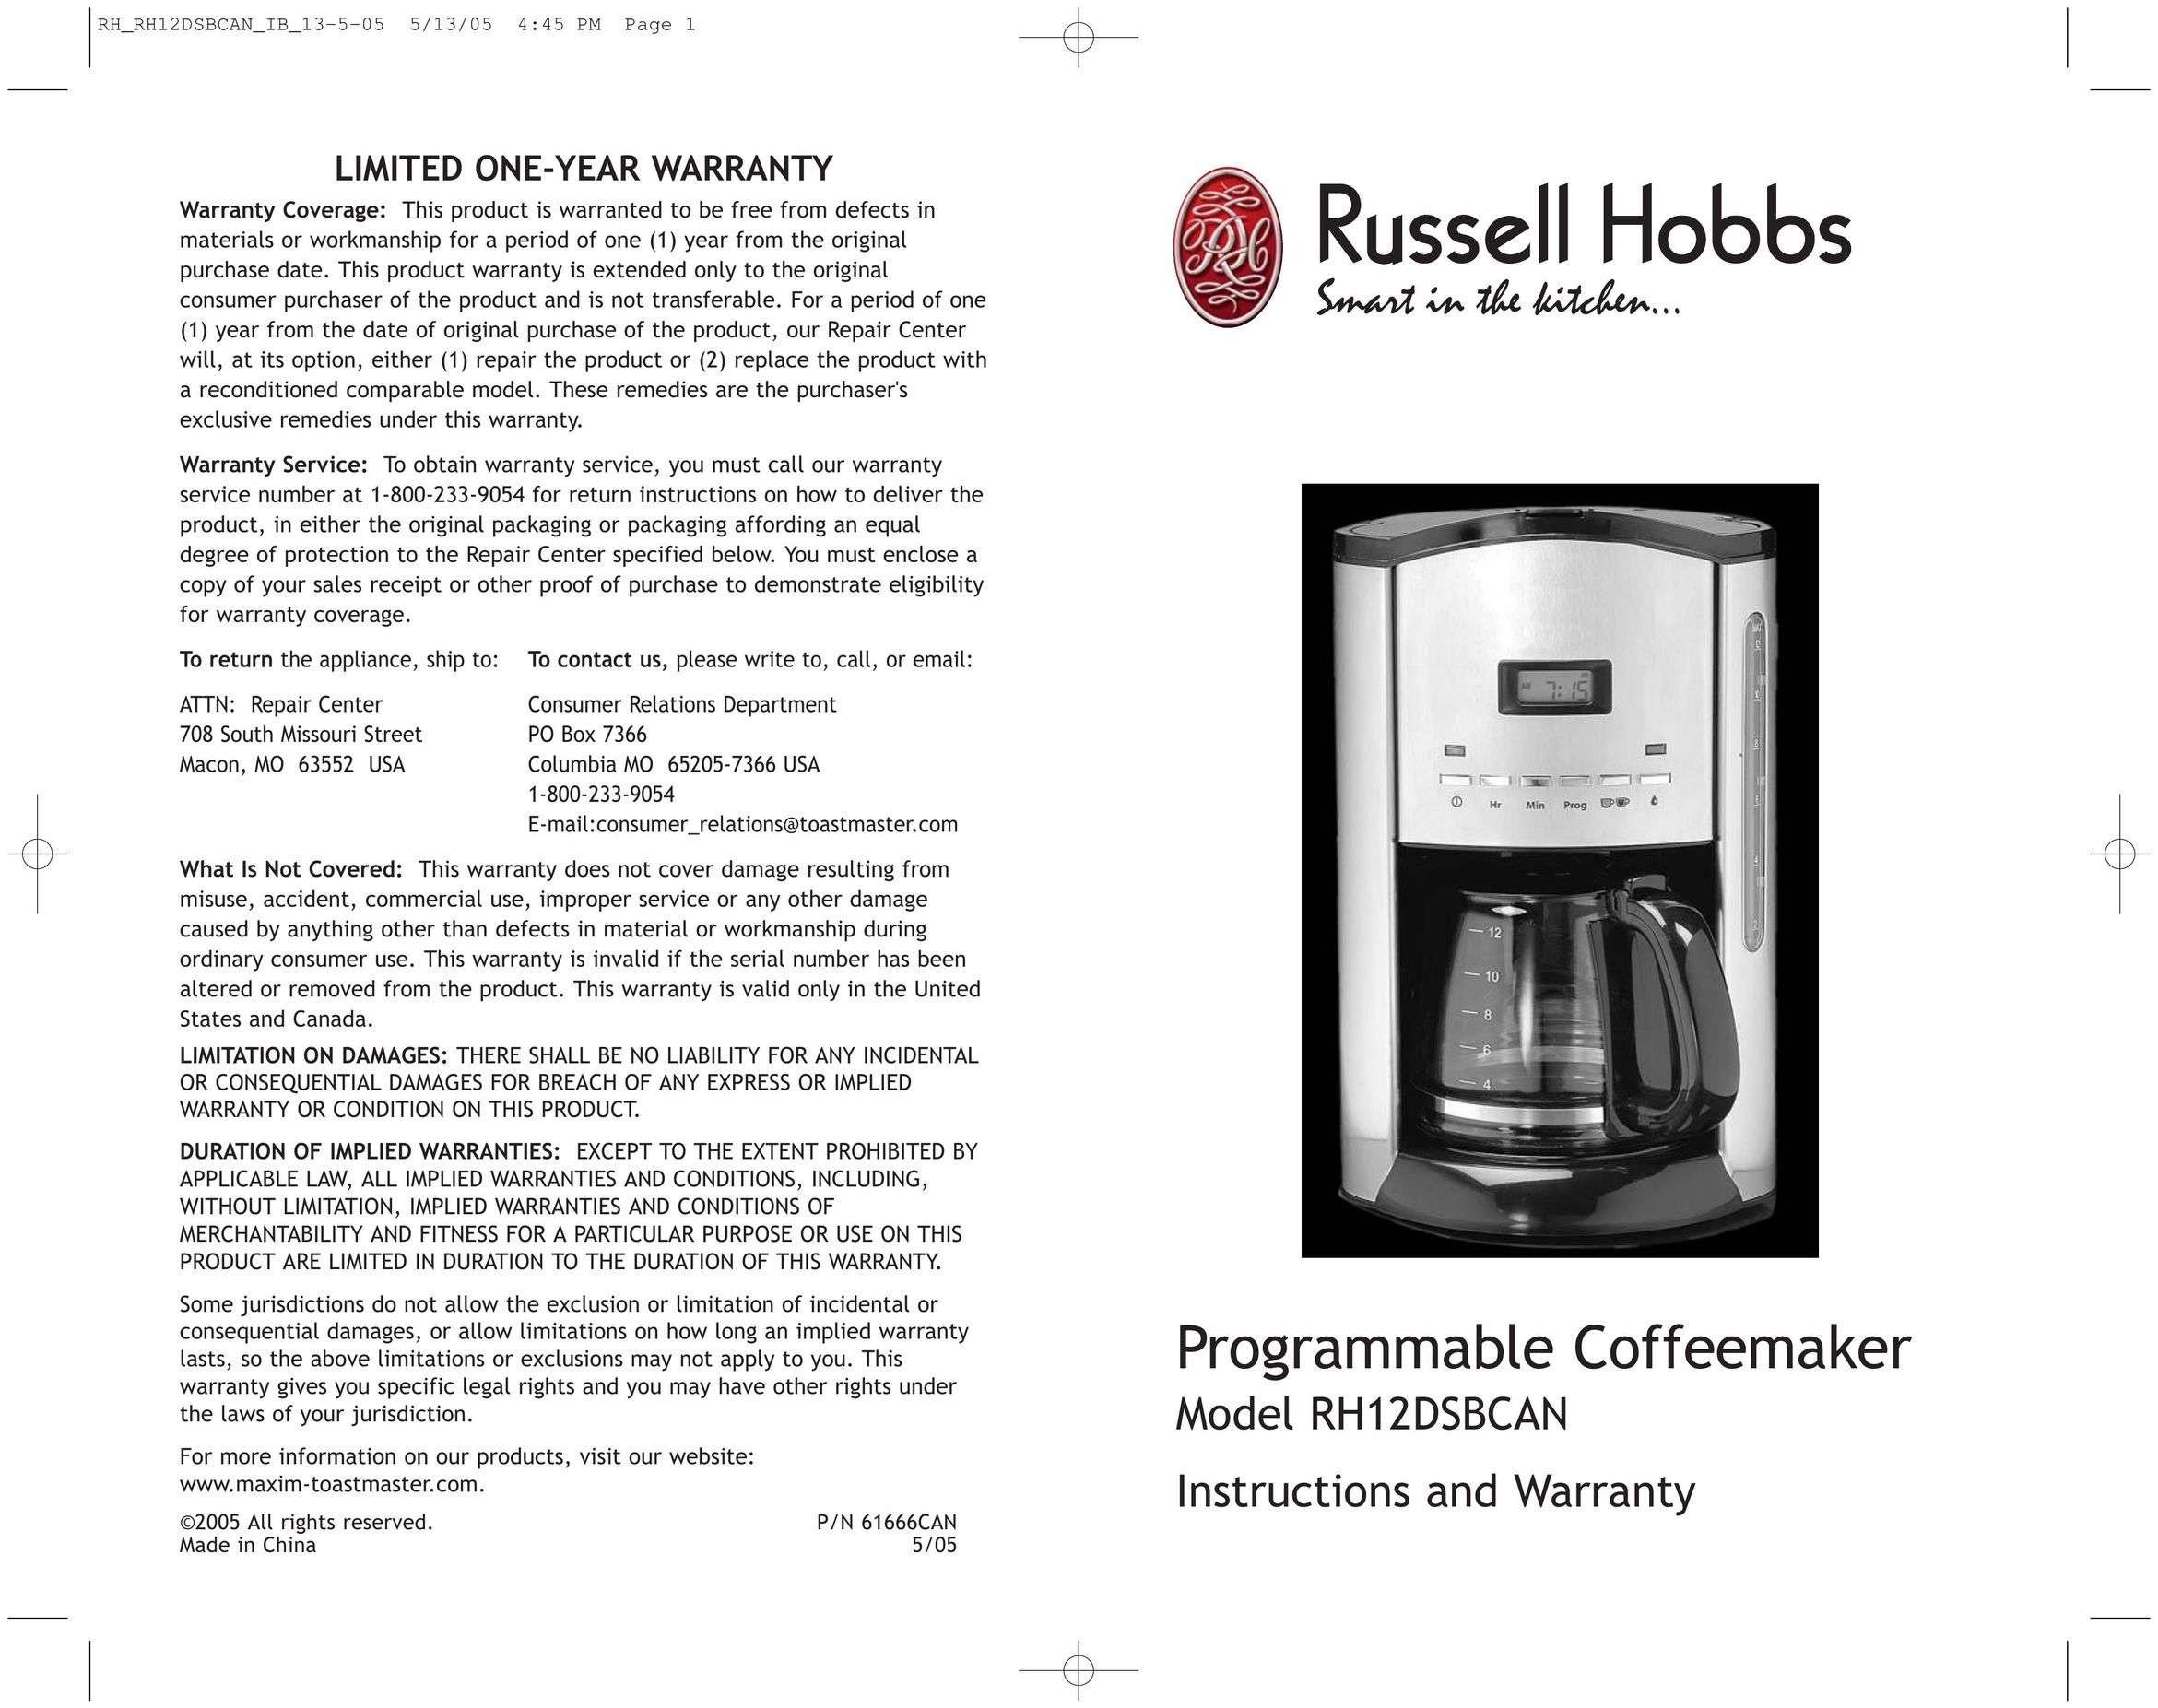 Toastmaster RH12DSBCAN Coffeemaker User Manual